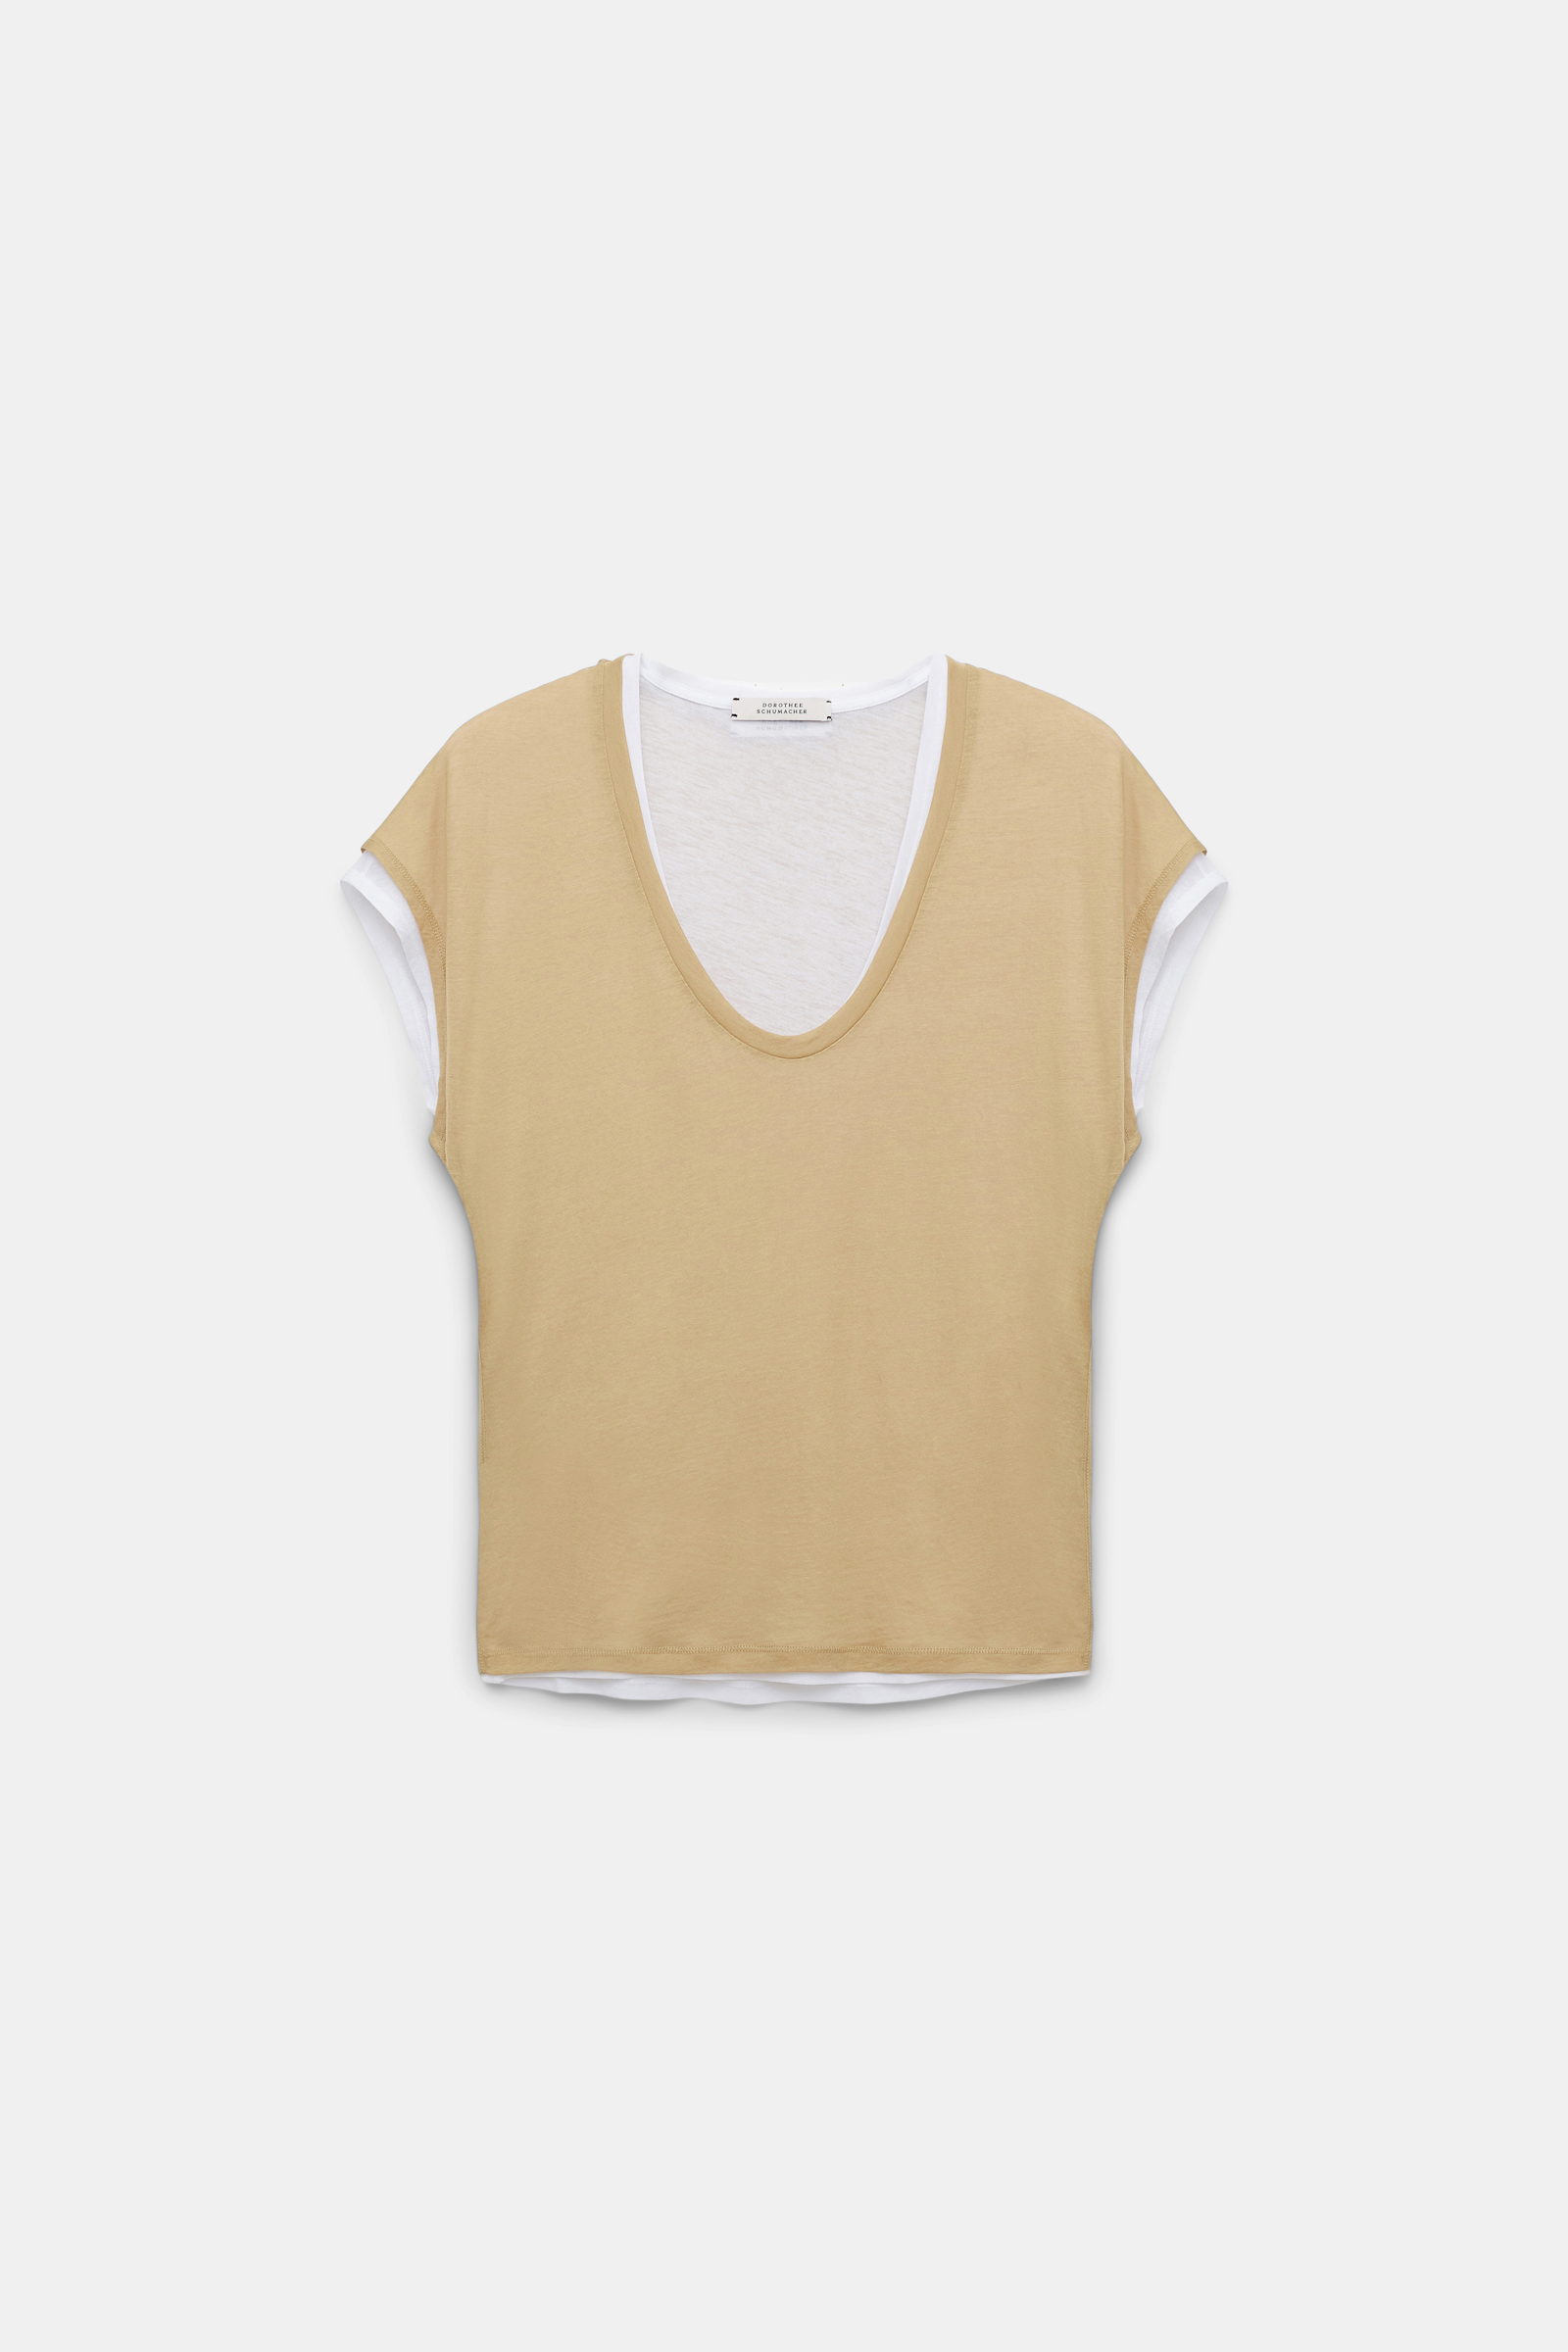 Dorothee Schumacher T-Shirt im Layer-Look brown and creme mix